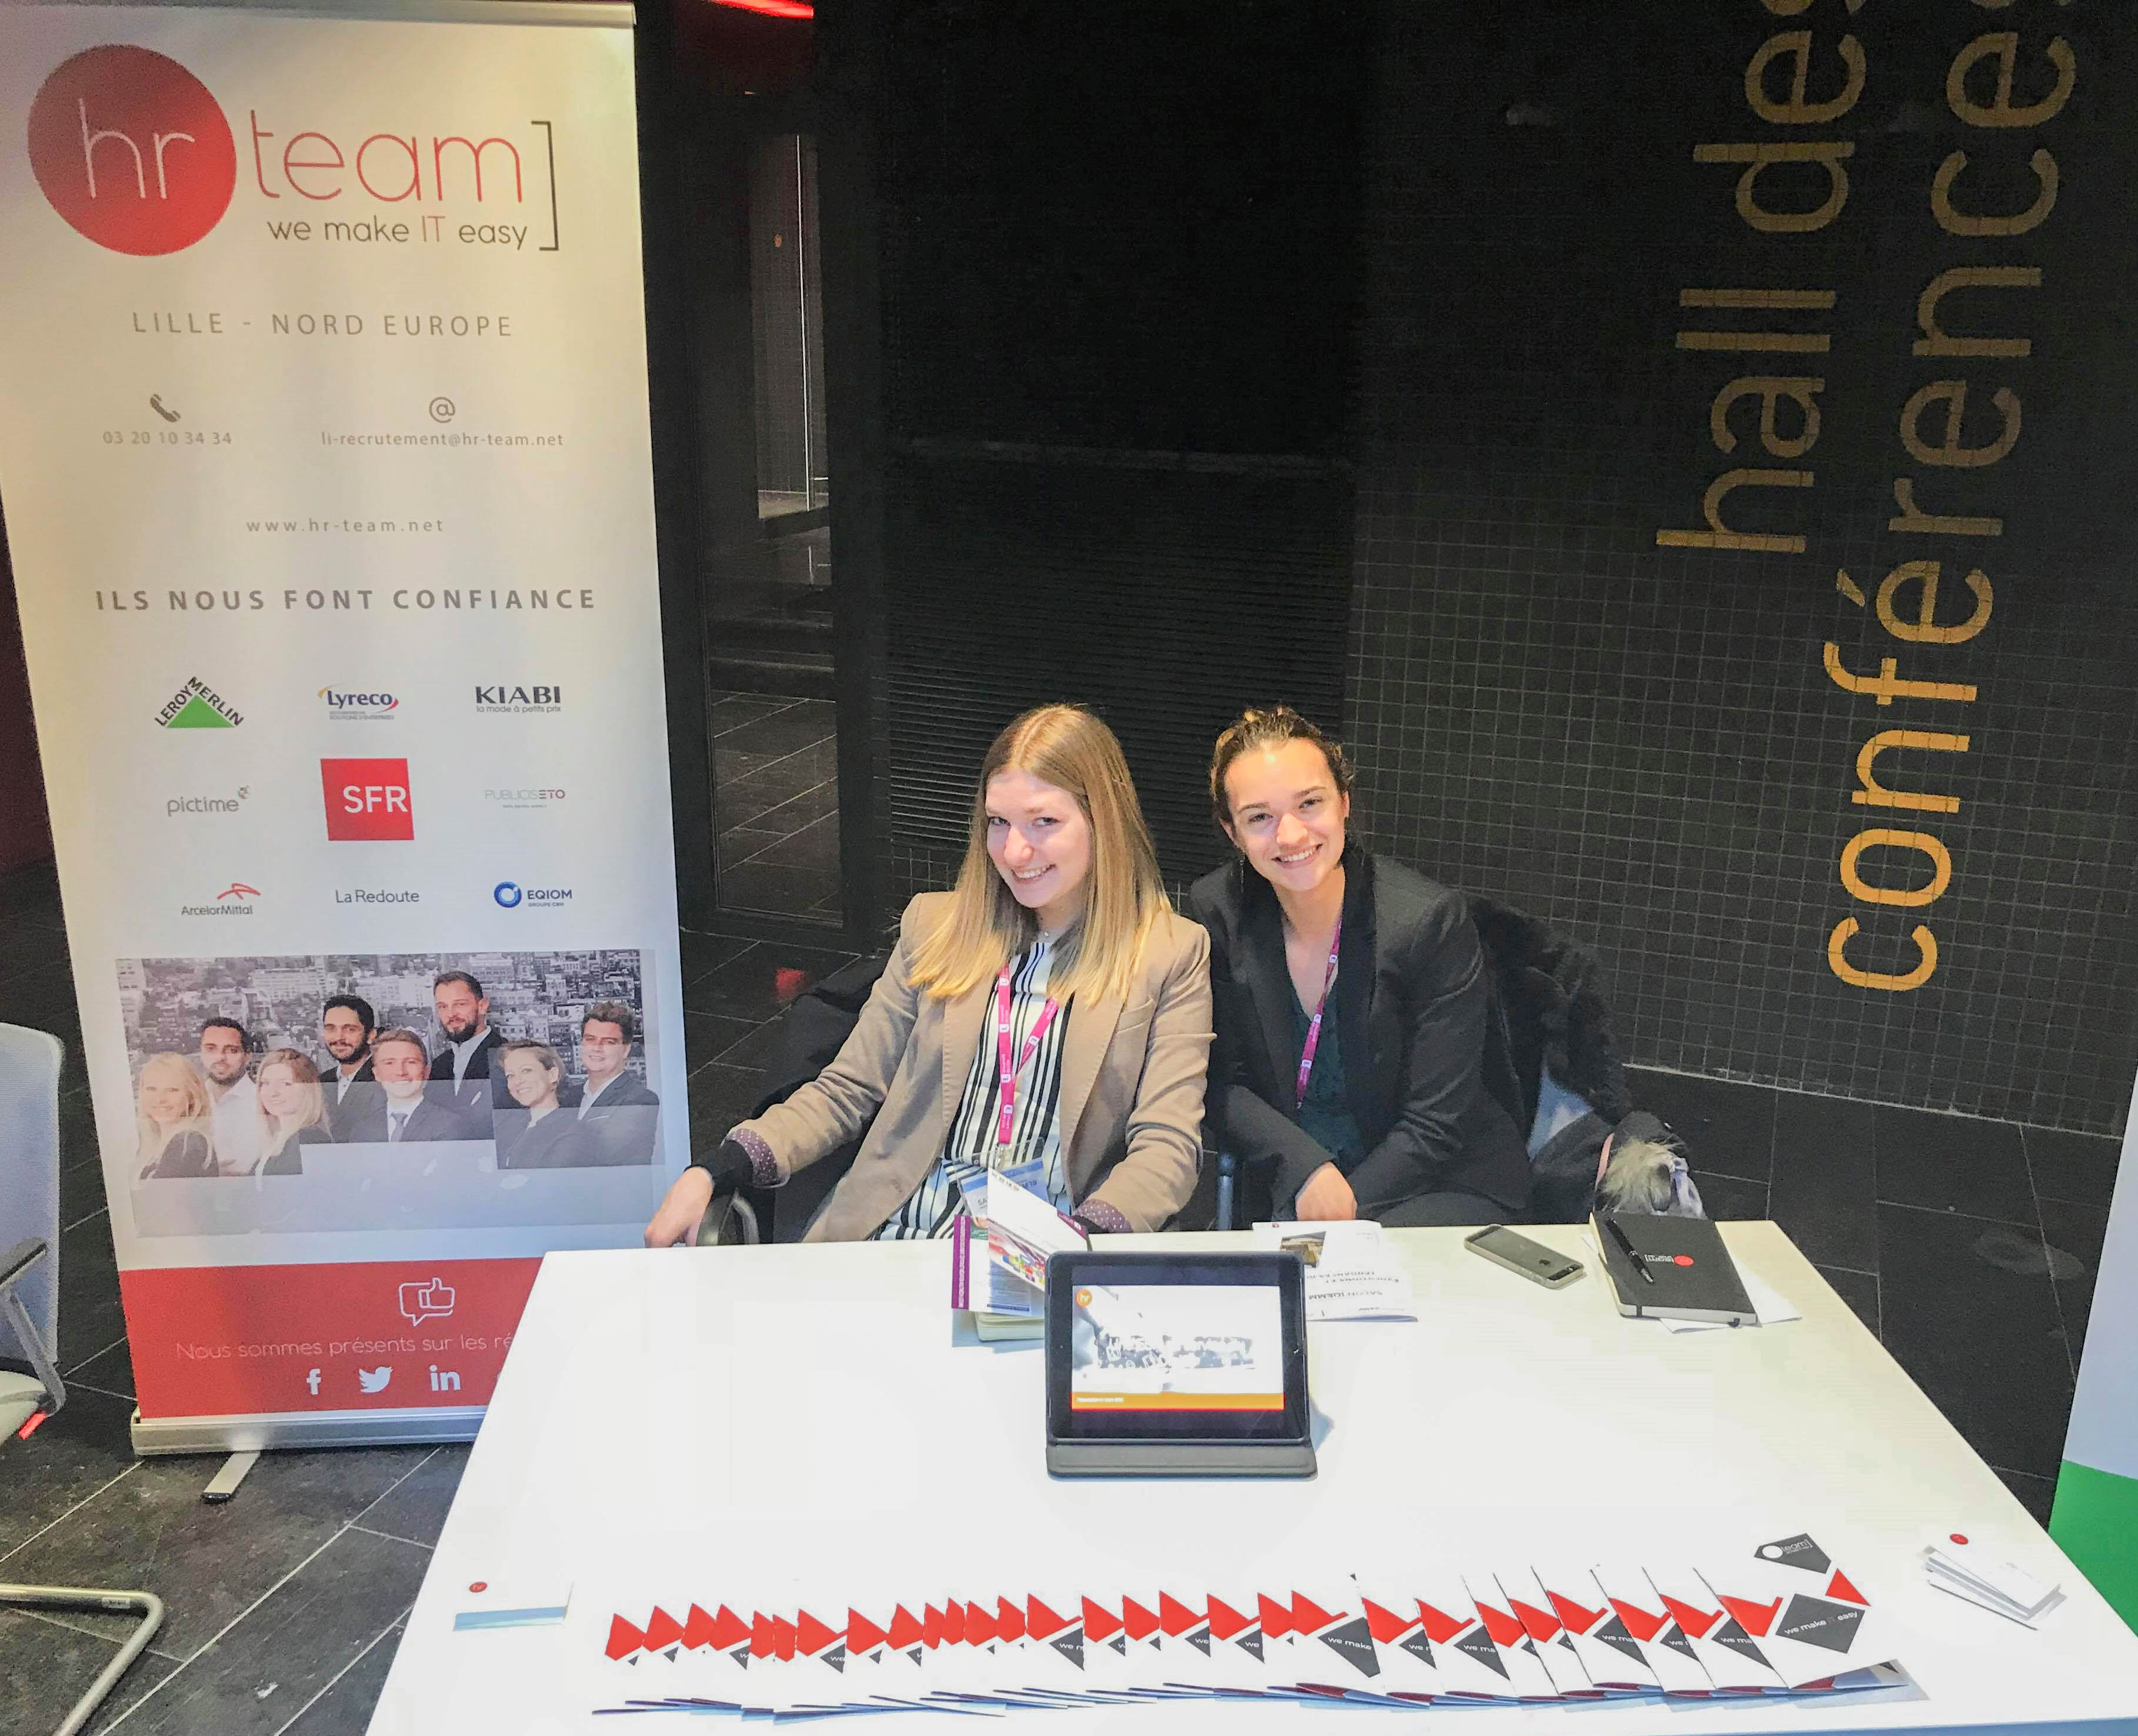 HR Team Lille in the IDEMM’19 show